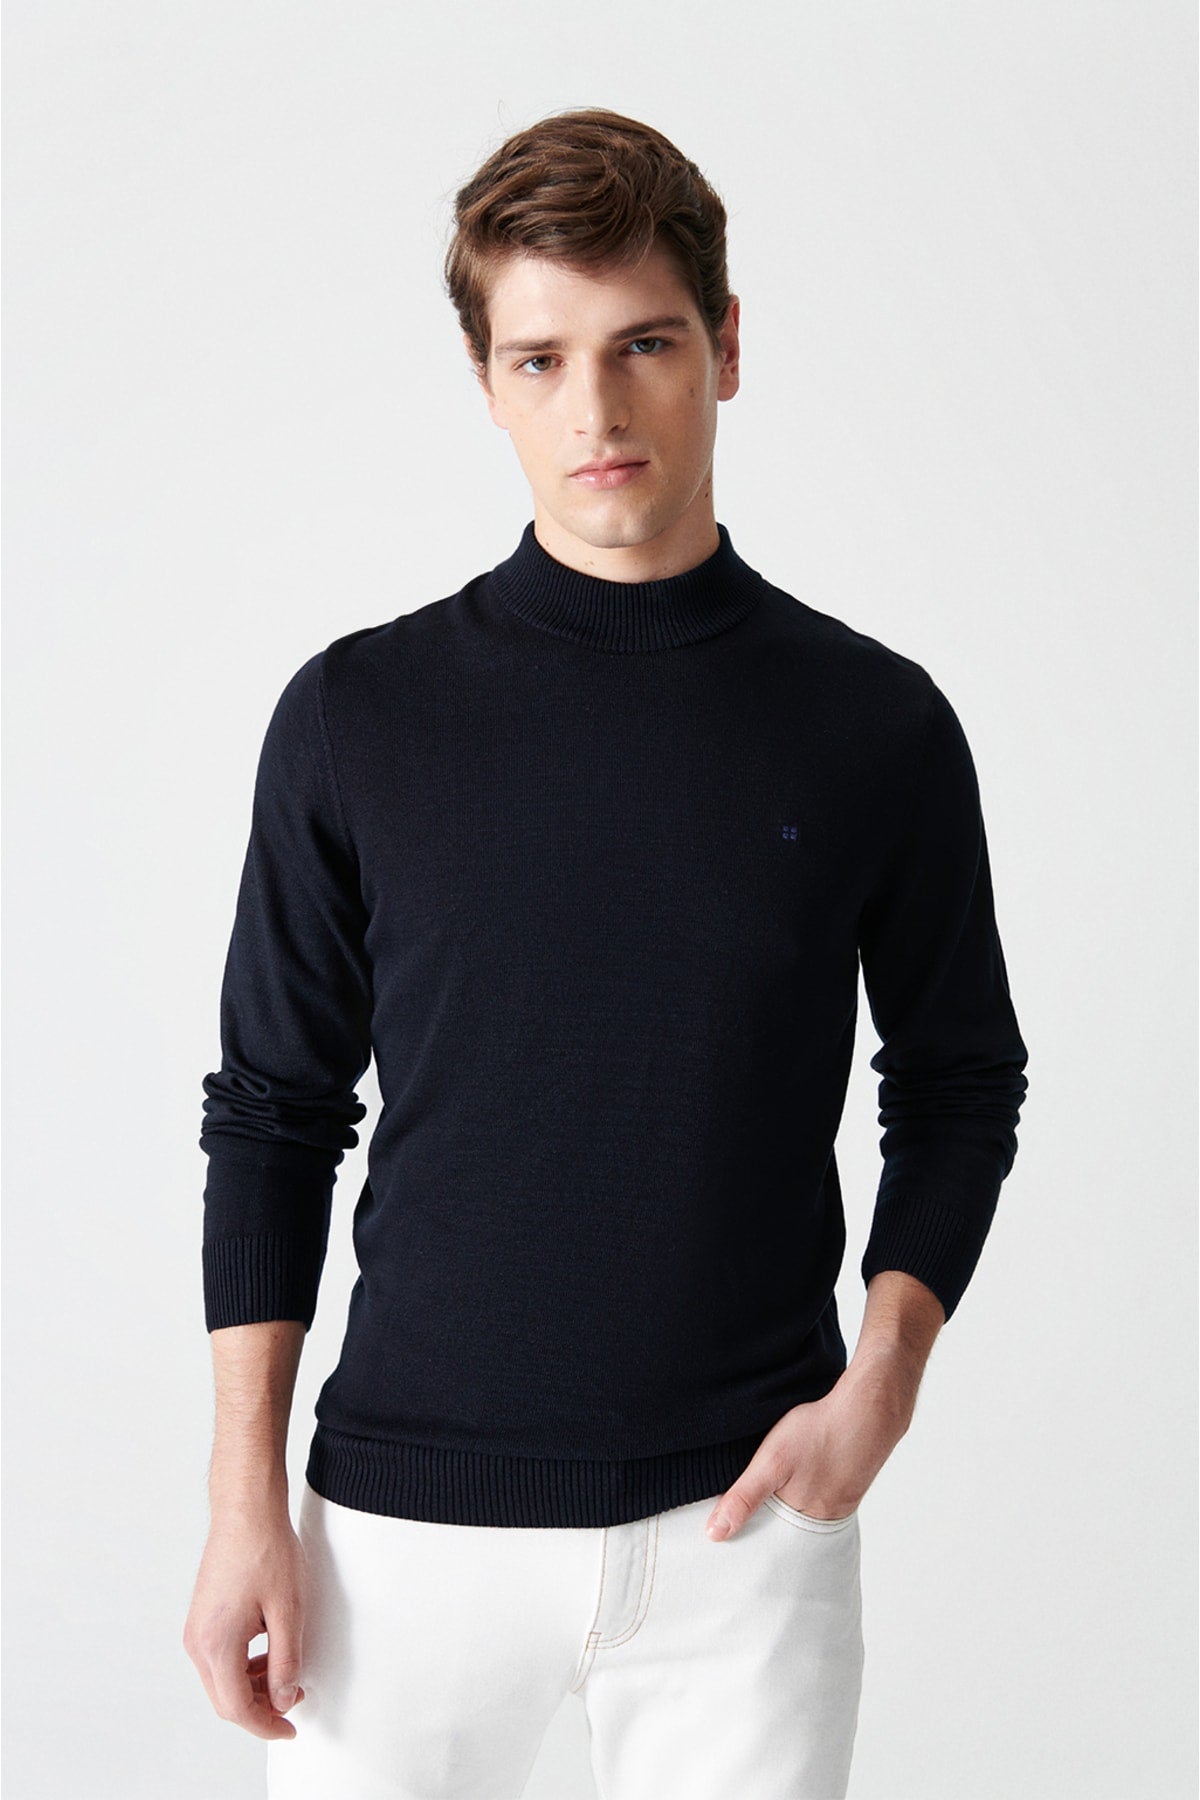 Unisex navy blue half -fisherman collar feathered knitwear sweater E005001